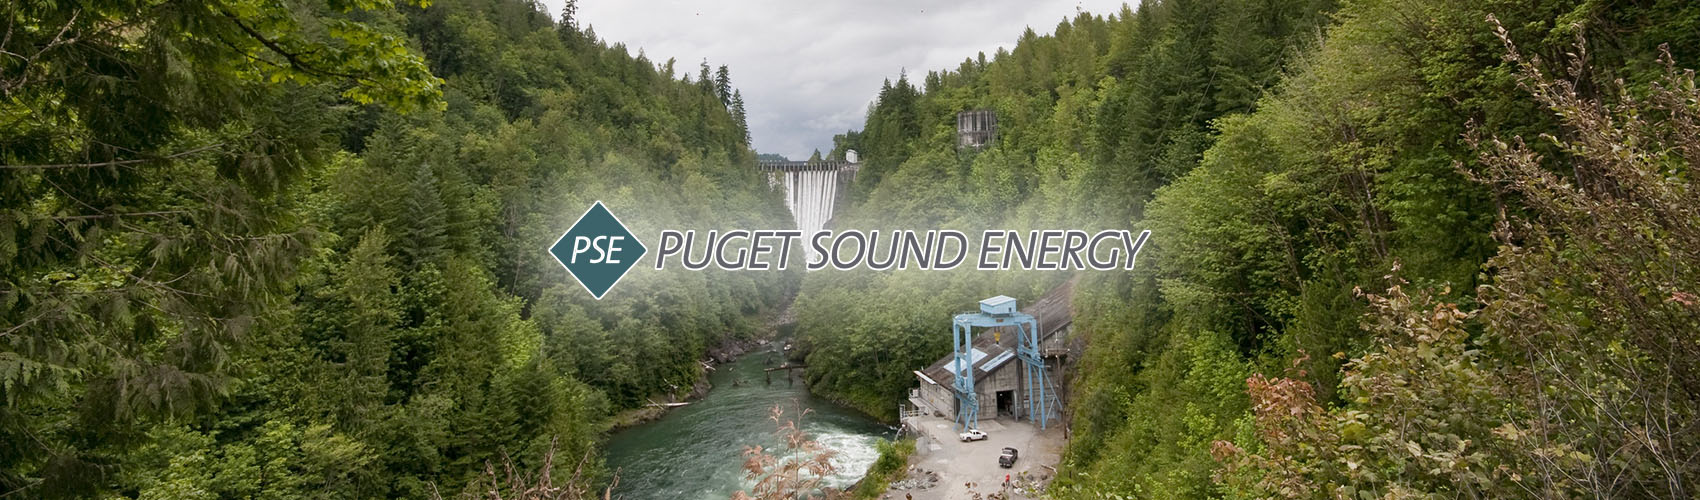 puget sound energy logo with dam background